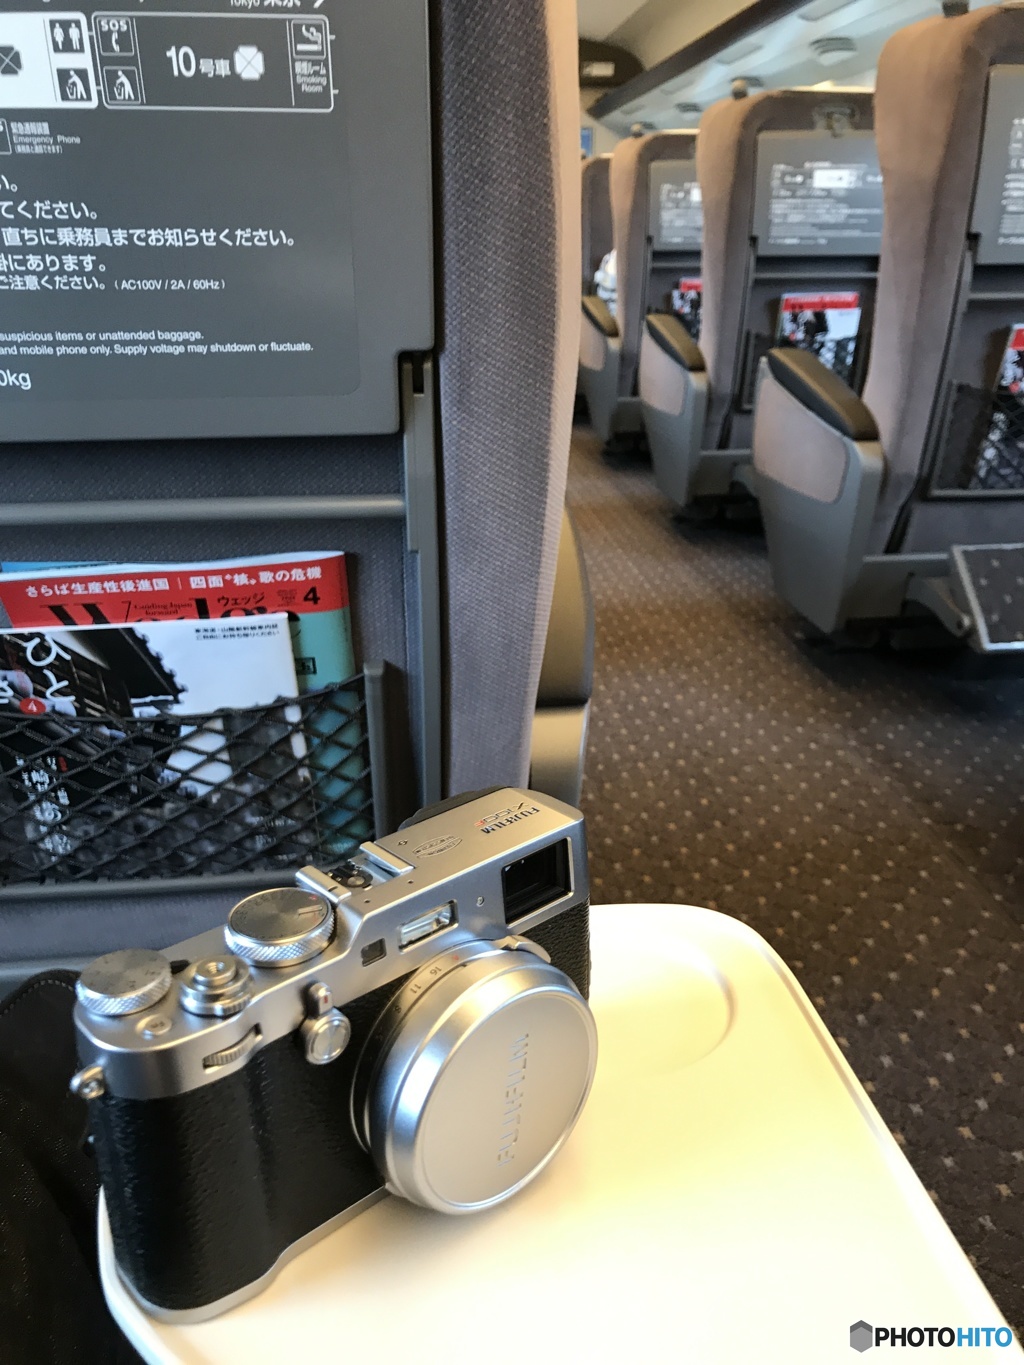 X100F in Shinkansen